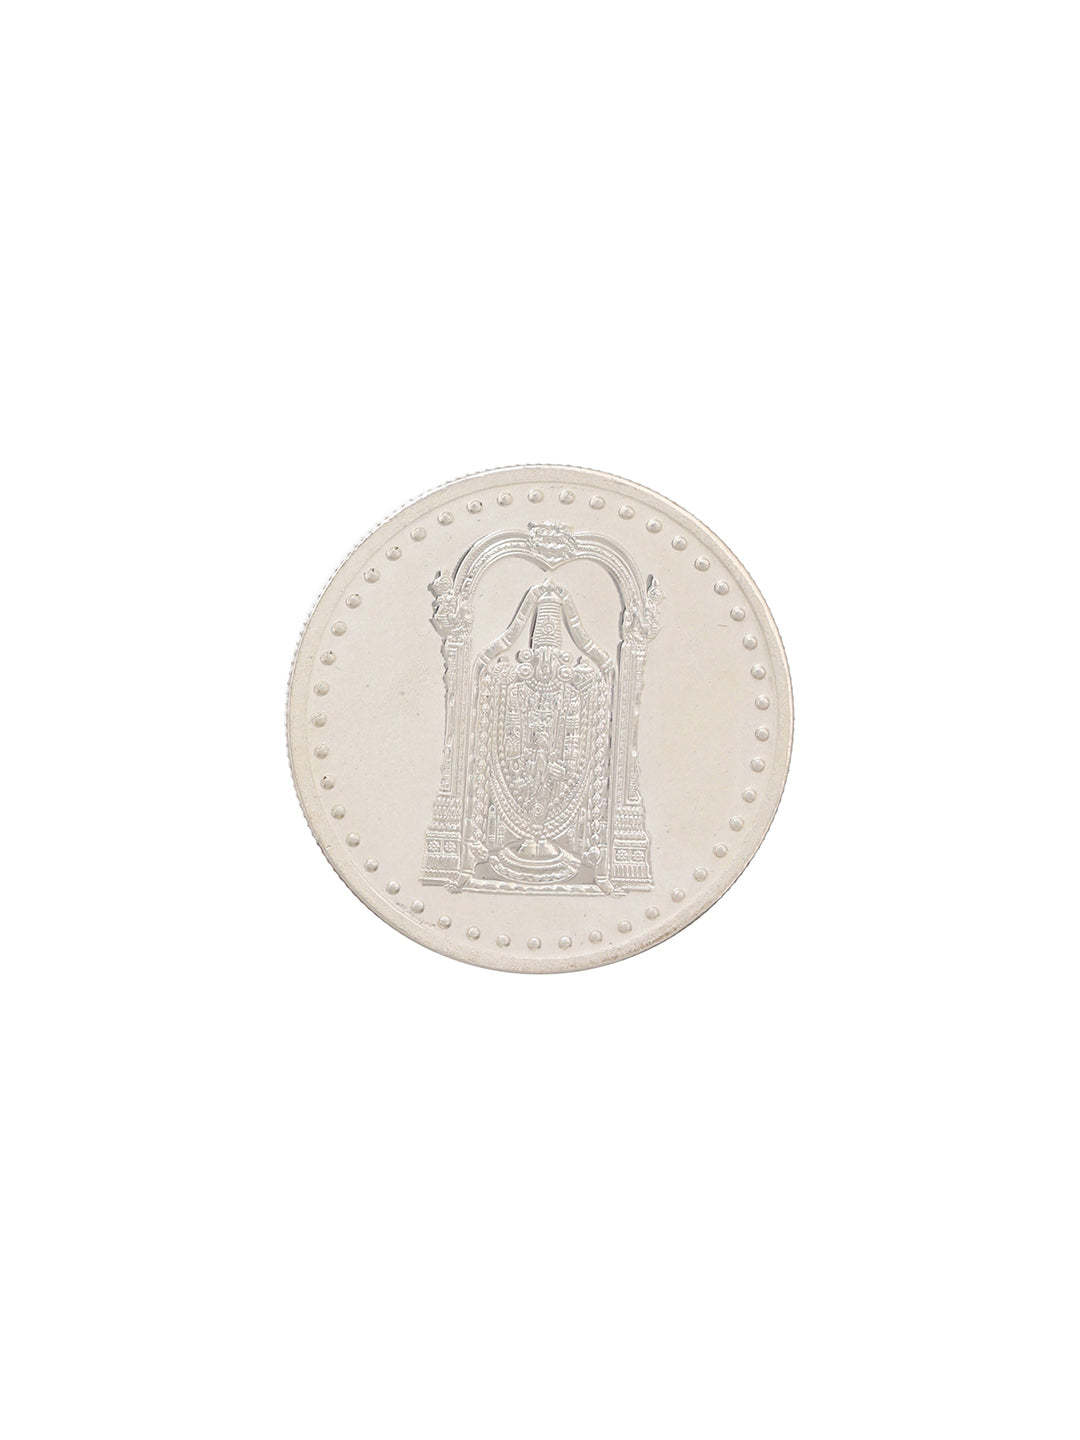 Tirupati Balaji 10 gram 999 Round Silver Coin